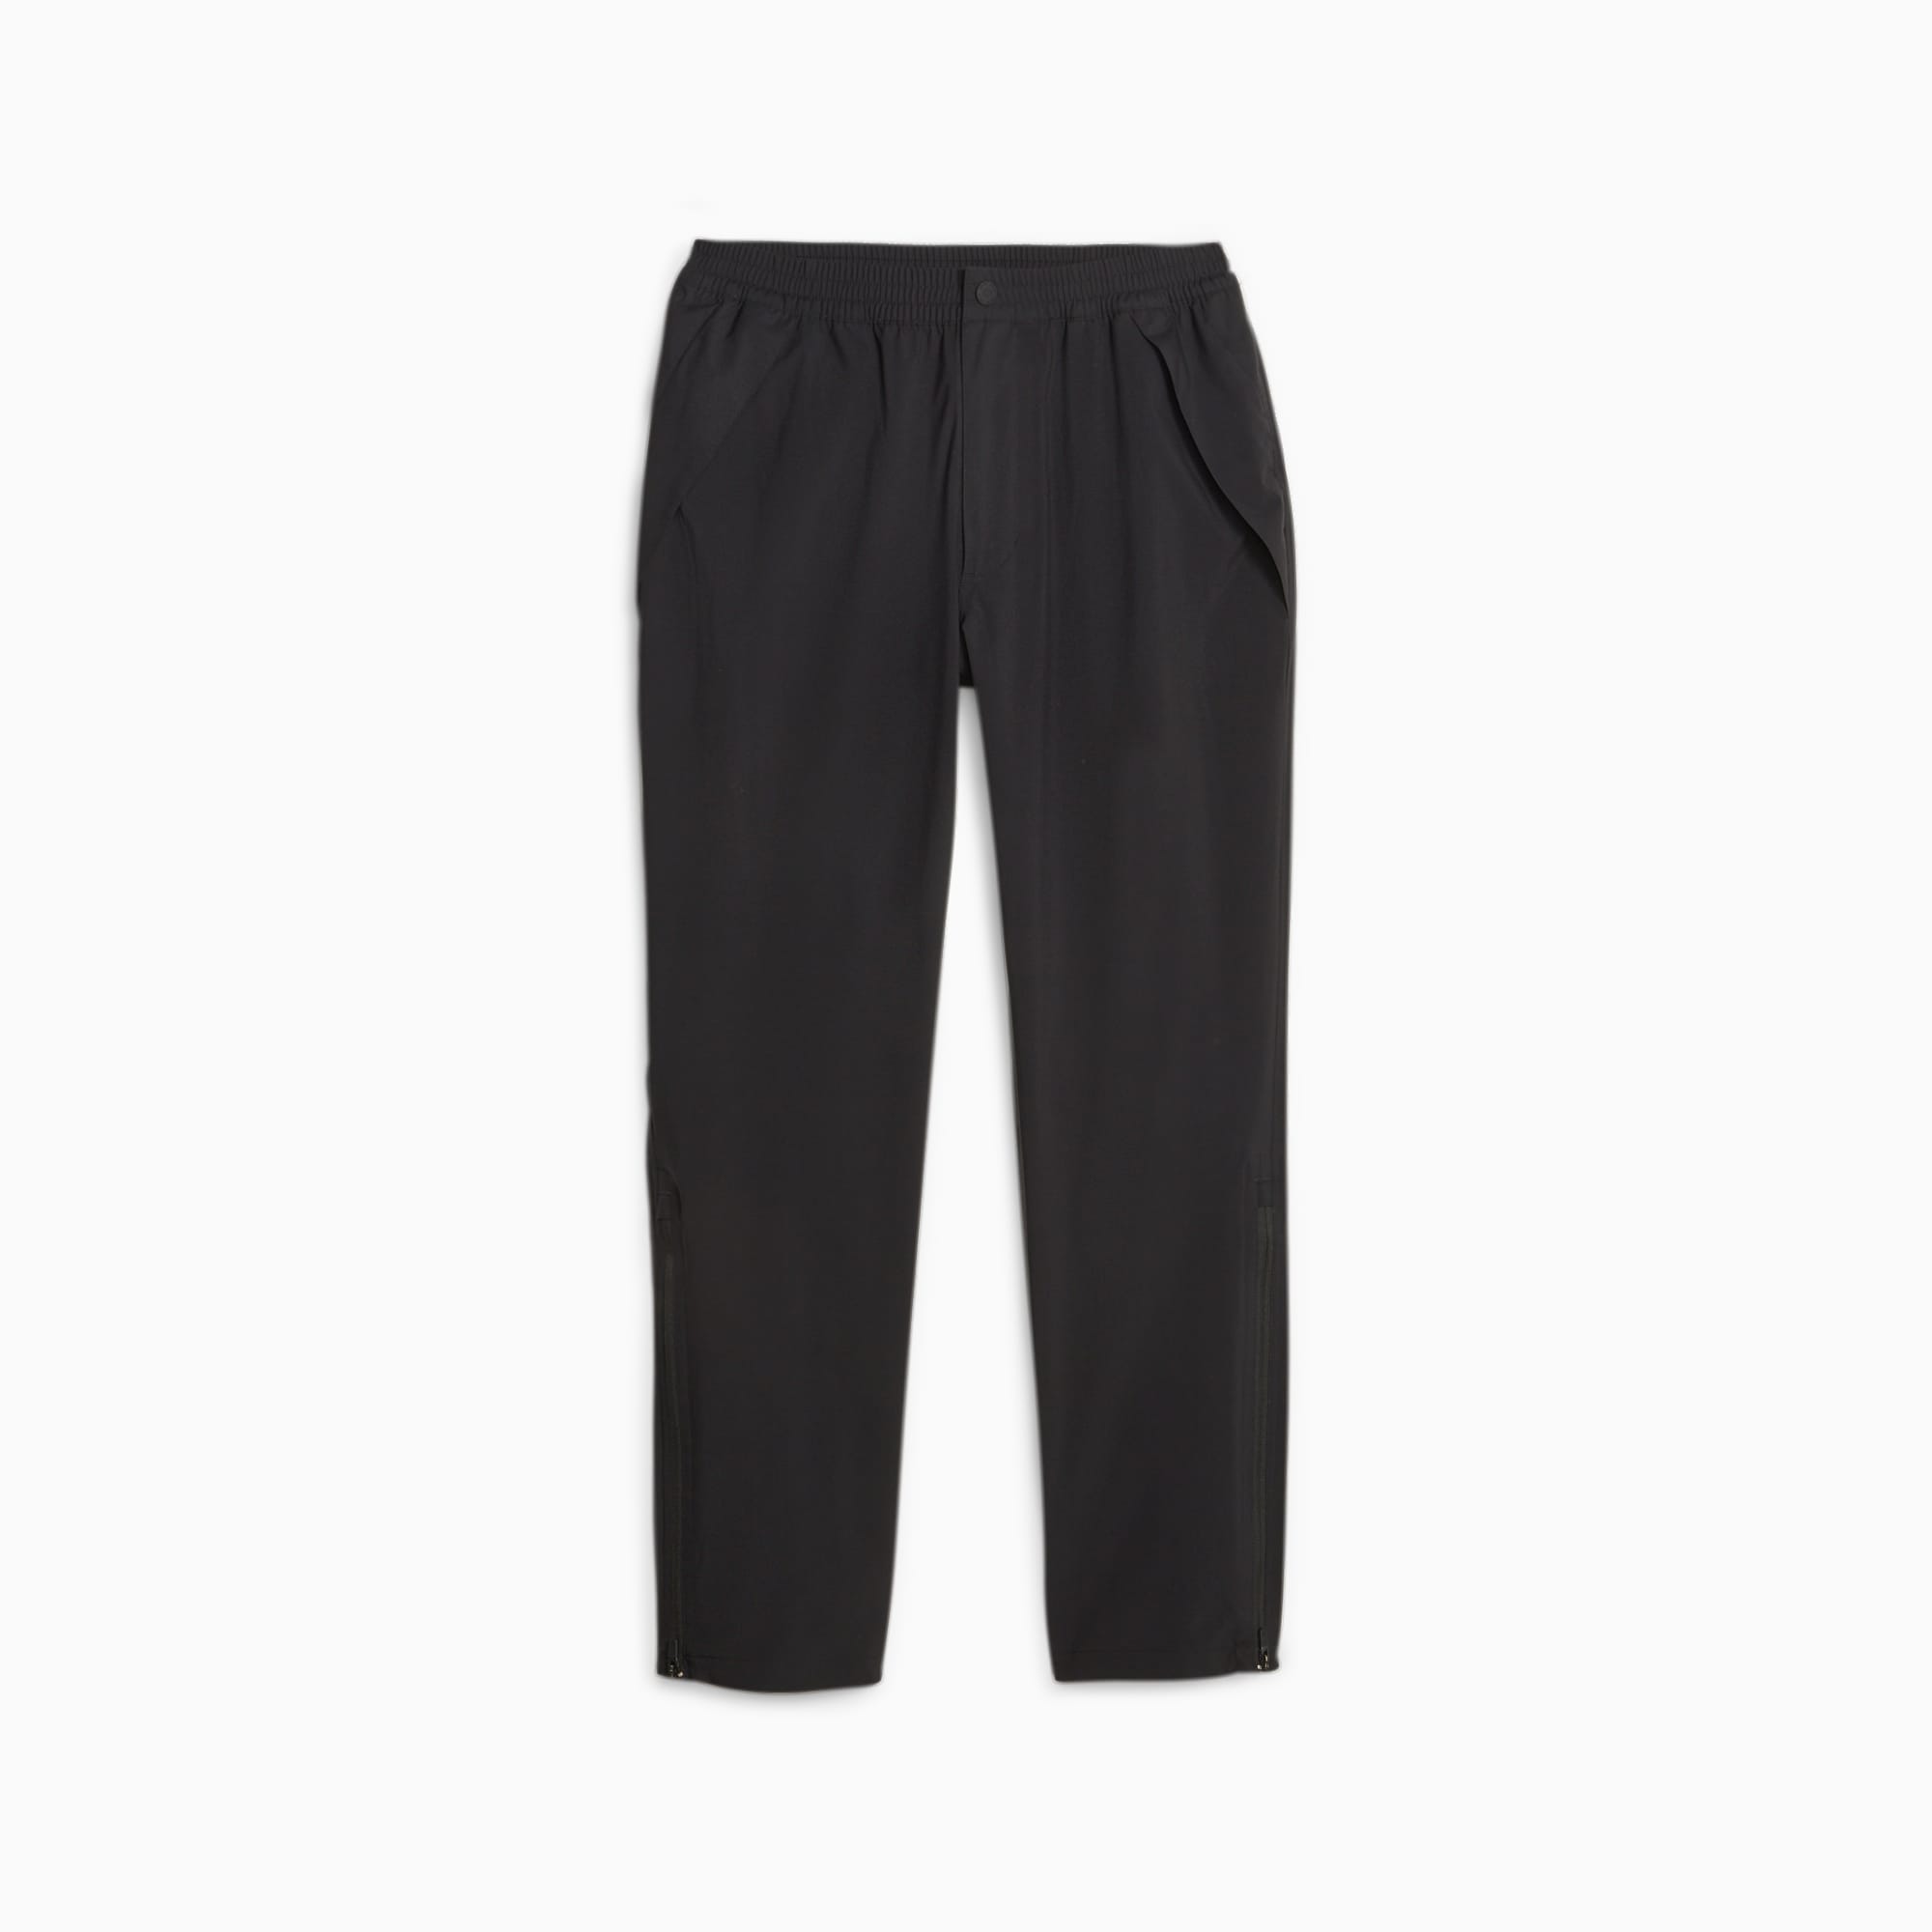 PUMA Drylbl Men's Rain Pants, Black, Size L/L, Clothing